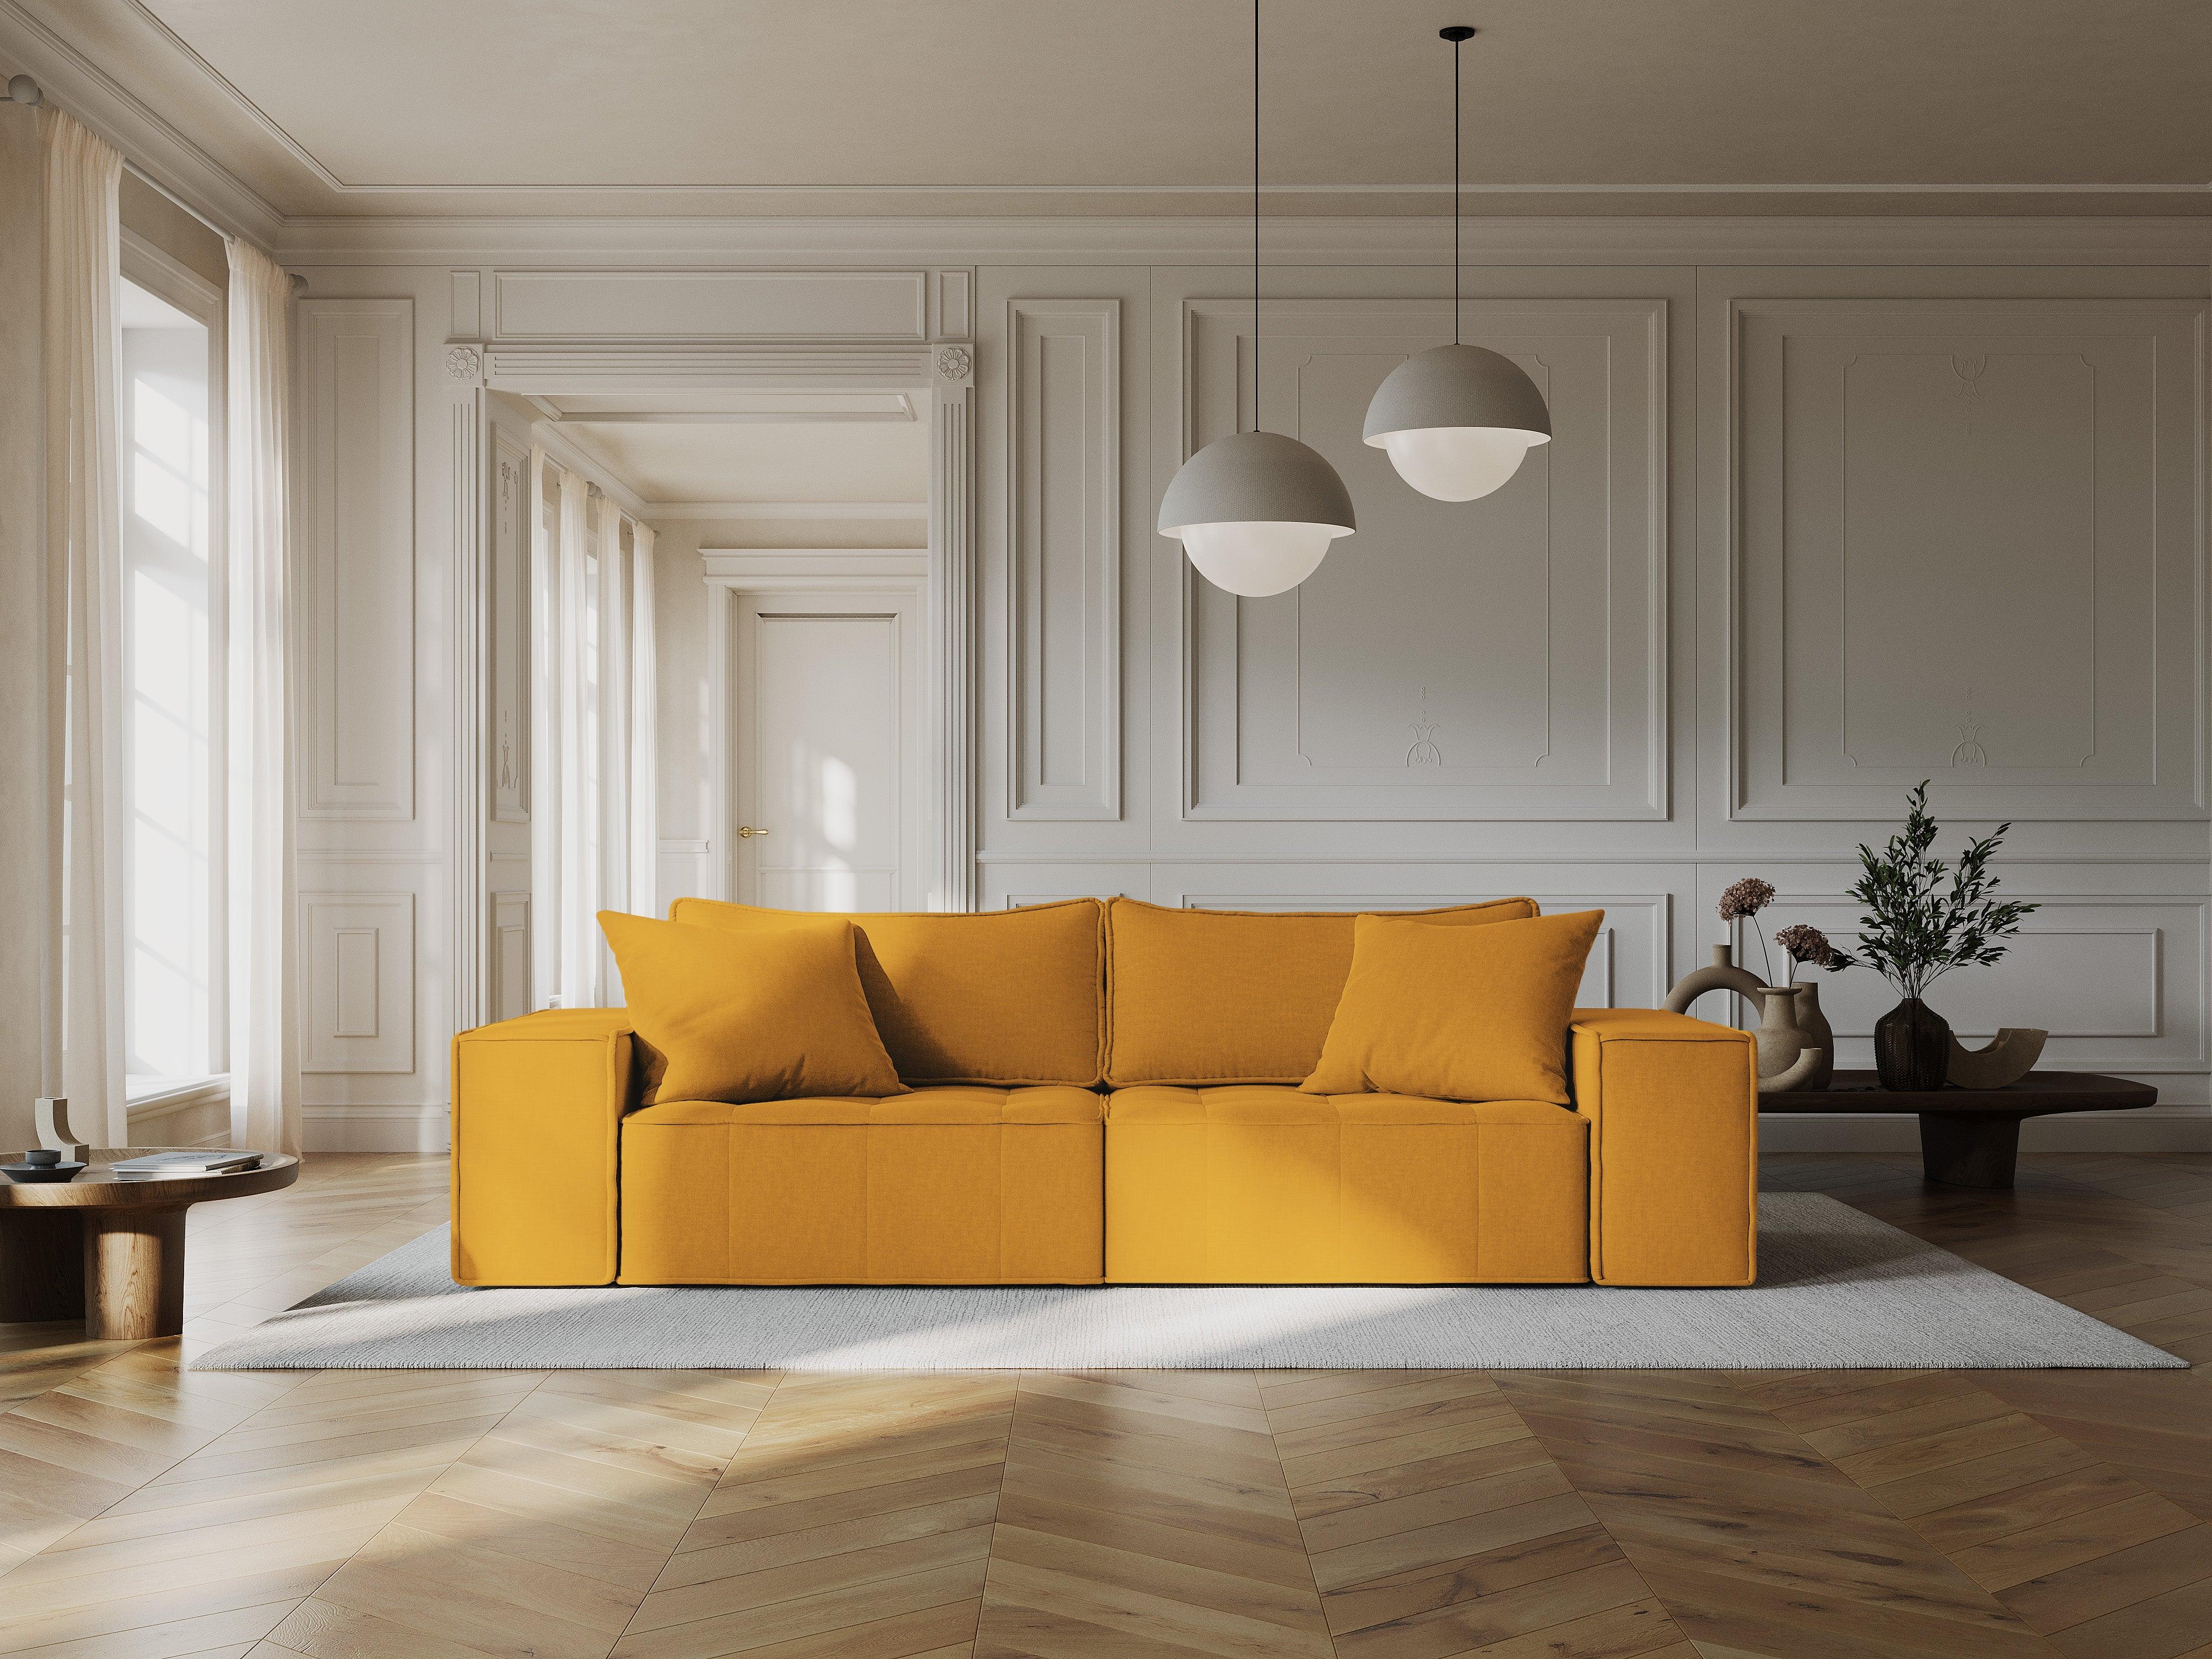 Sofa 3-osobowa VERLET musztardowy Interieurs 86    Eye on Design